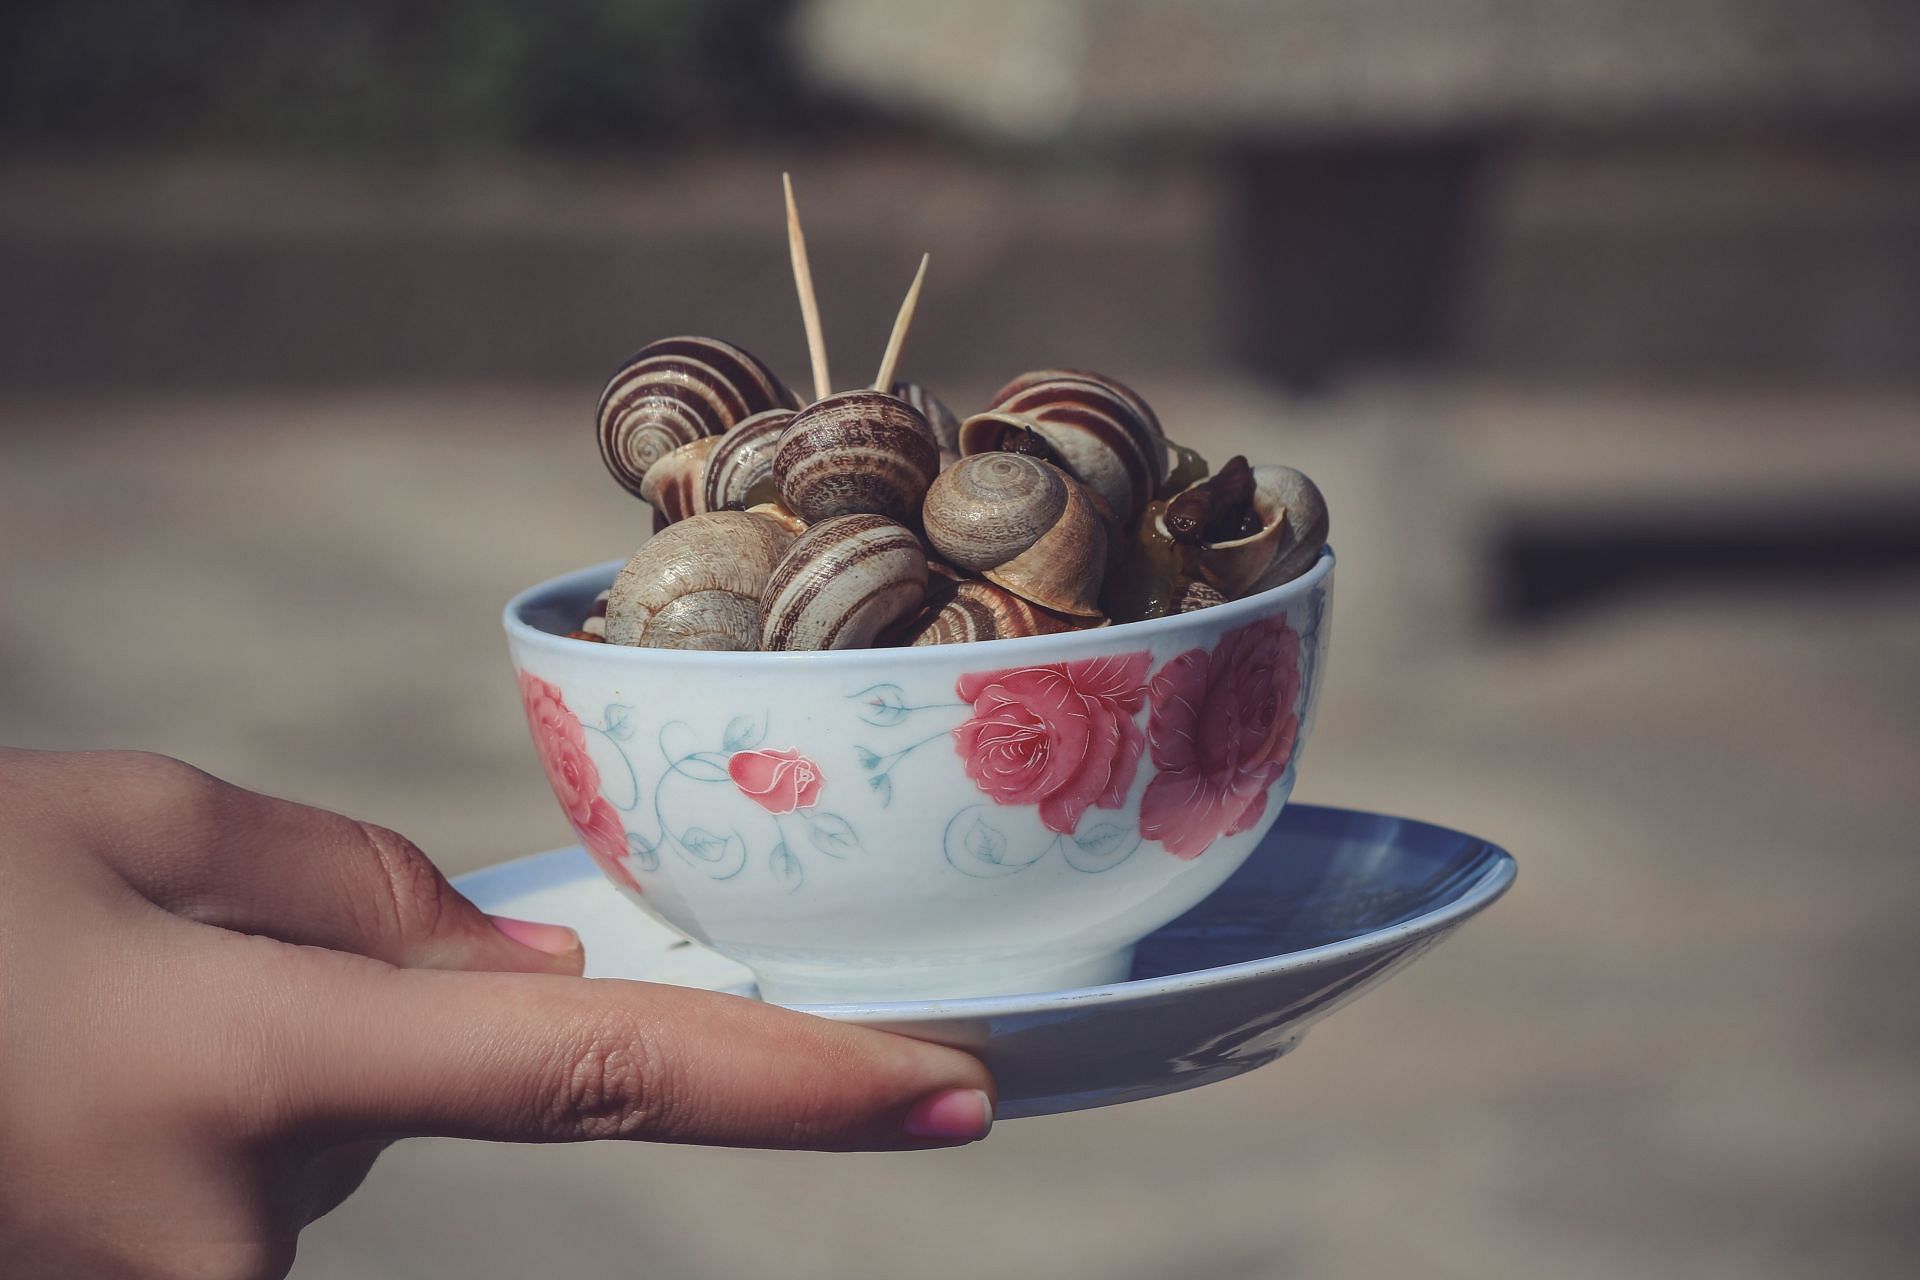 Periwinkle food refers to a species of small edible snail (Image via Unsplash/Aziz Acharki)